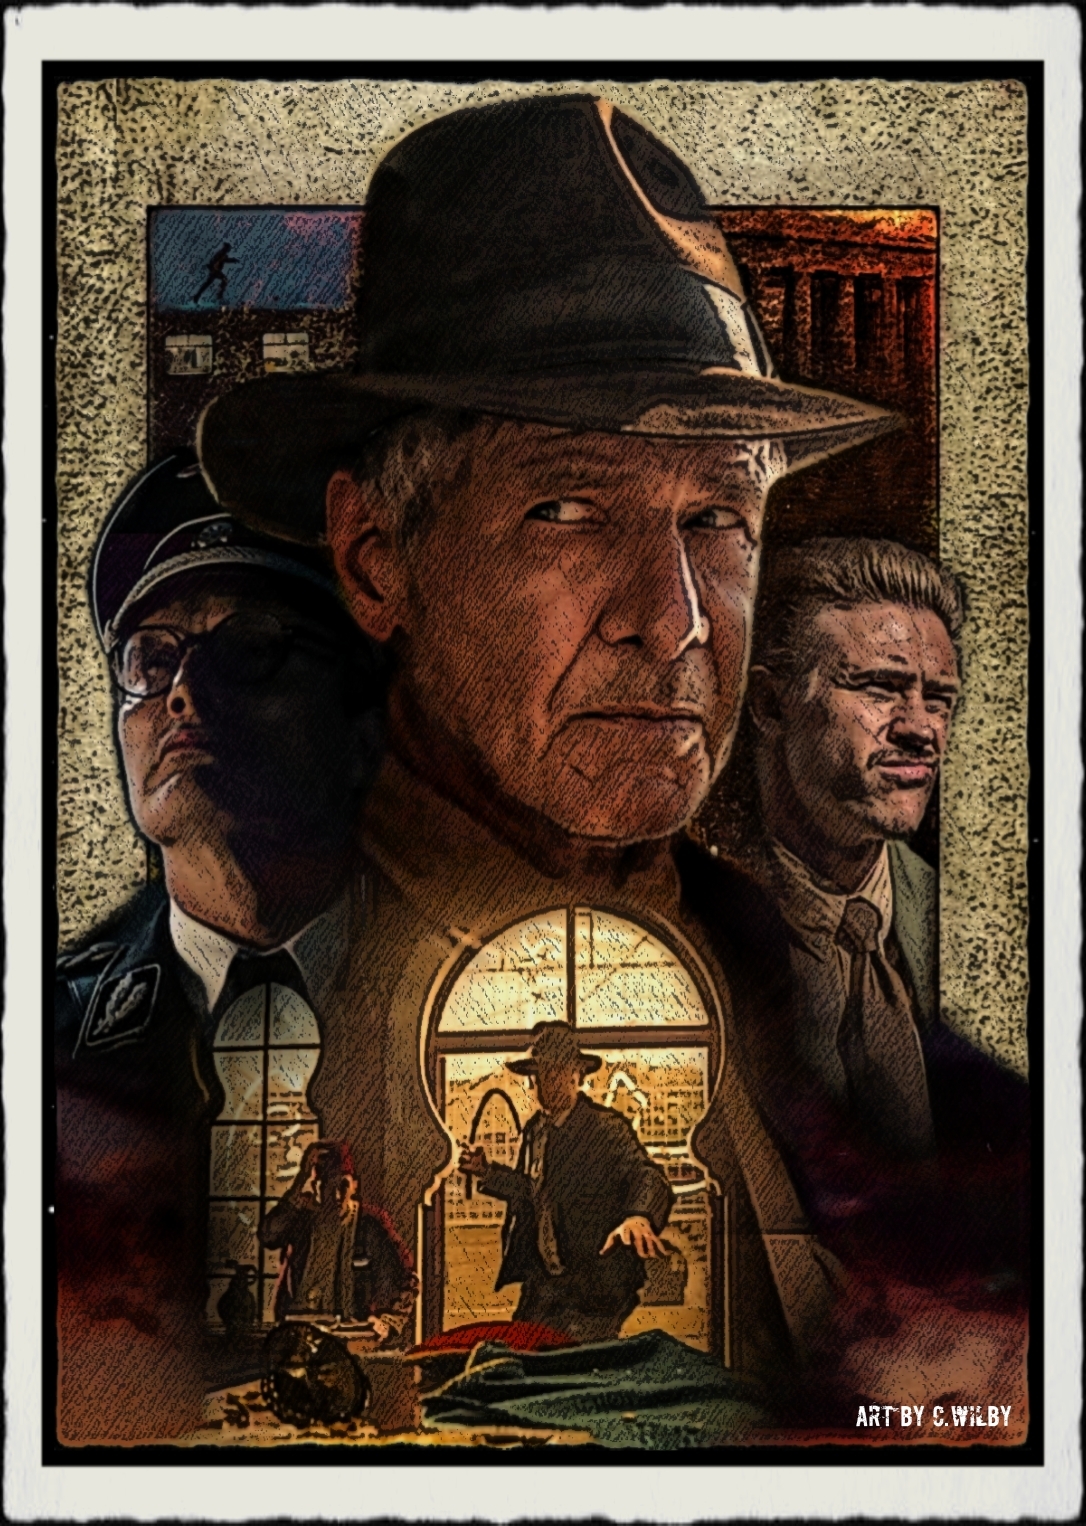 Indiana Jones and the Dial of Destiny (2023) - IMDb